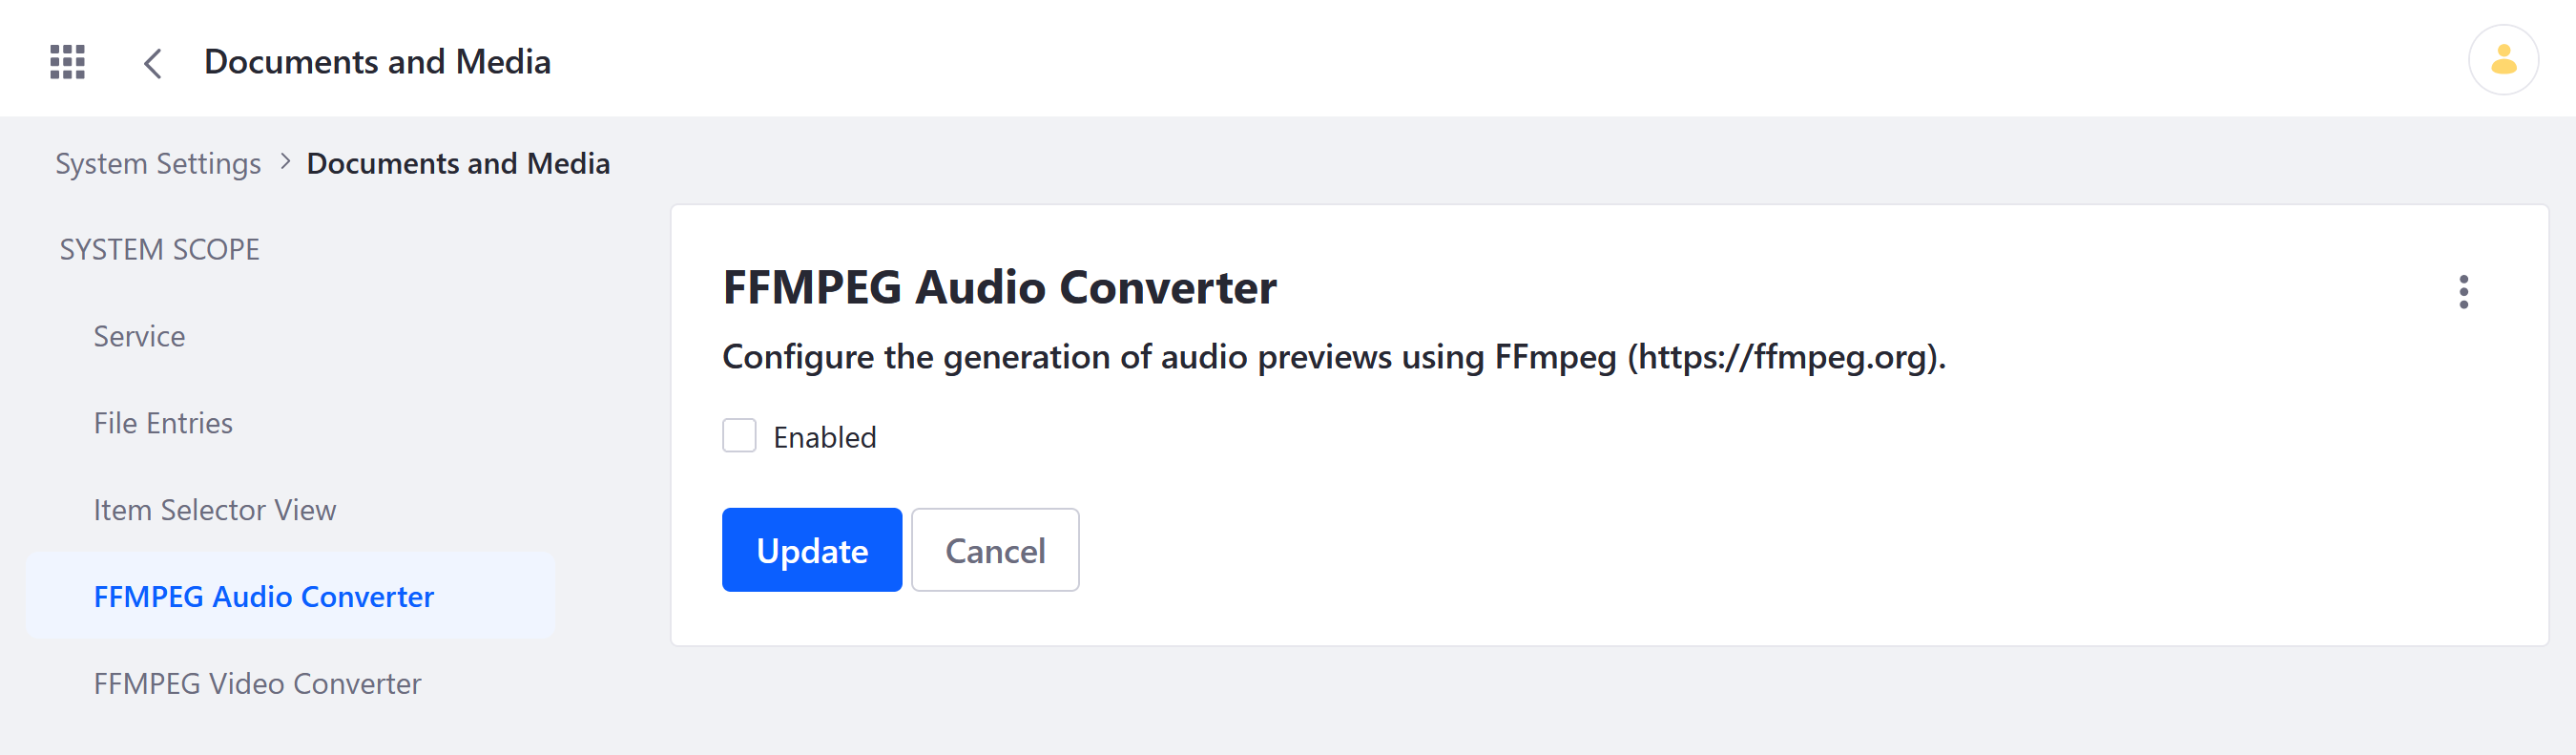 ［FFMPEG Audio Converter］と［FFMPEG Video Converter］の両方を有効にします。